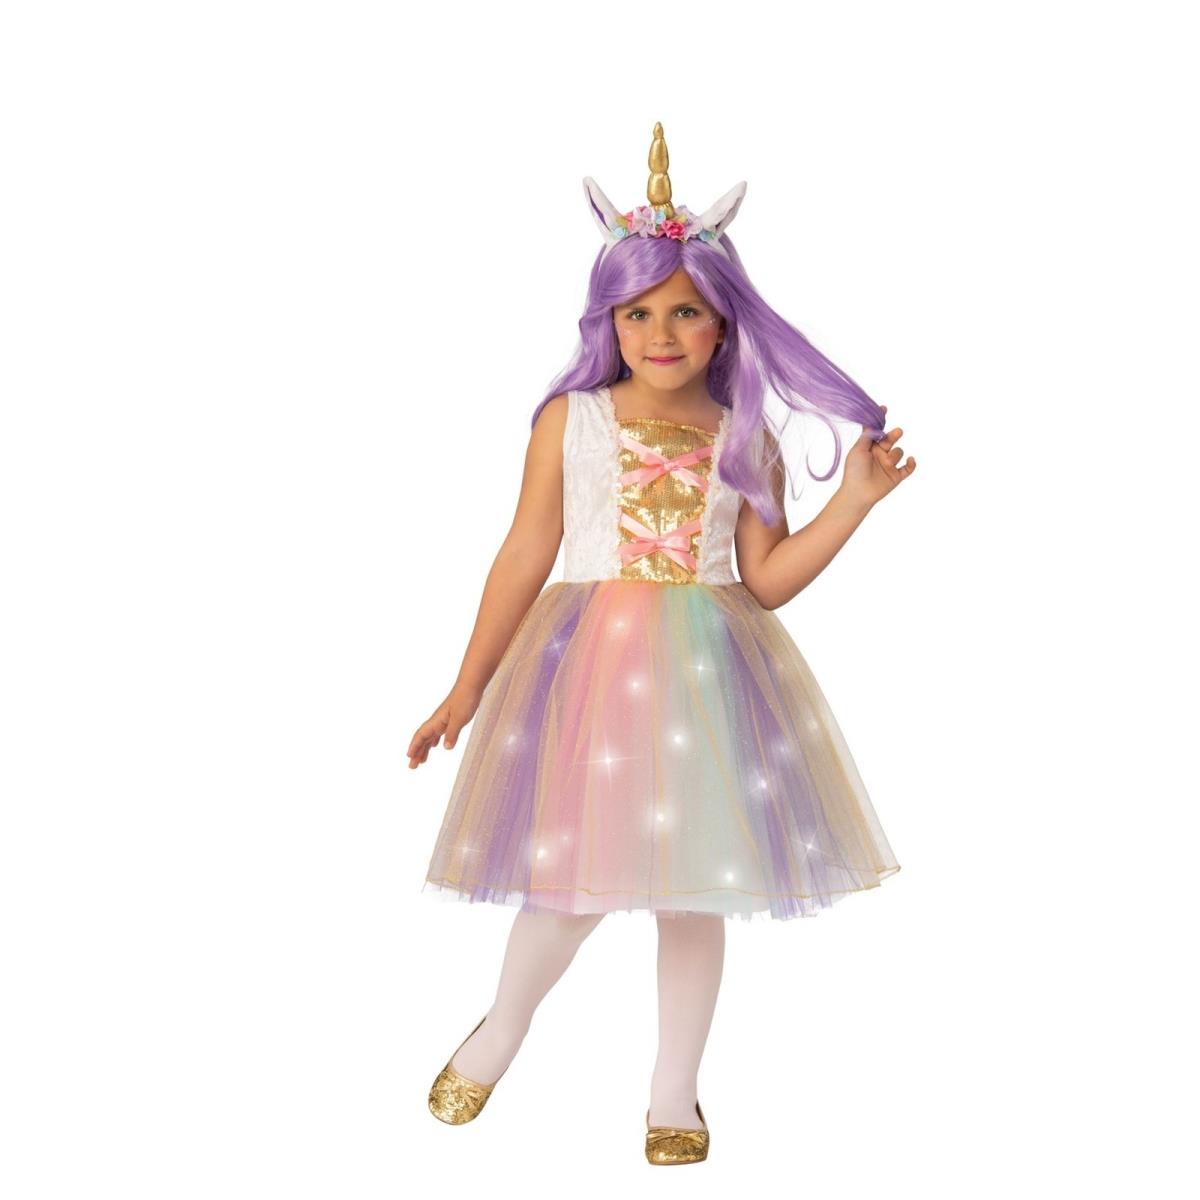 Rubie's Costume Co 405487 Unicorn Child Costume - Small